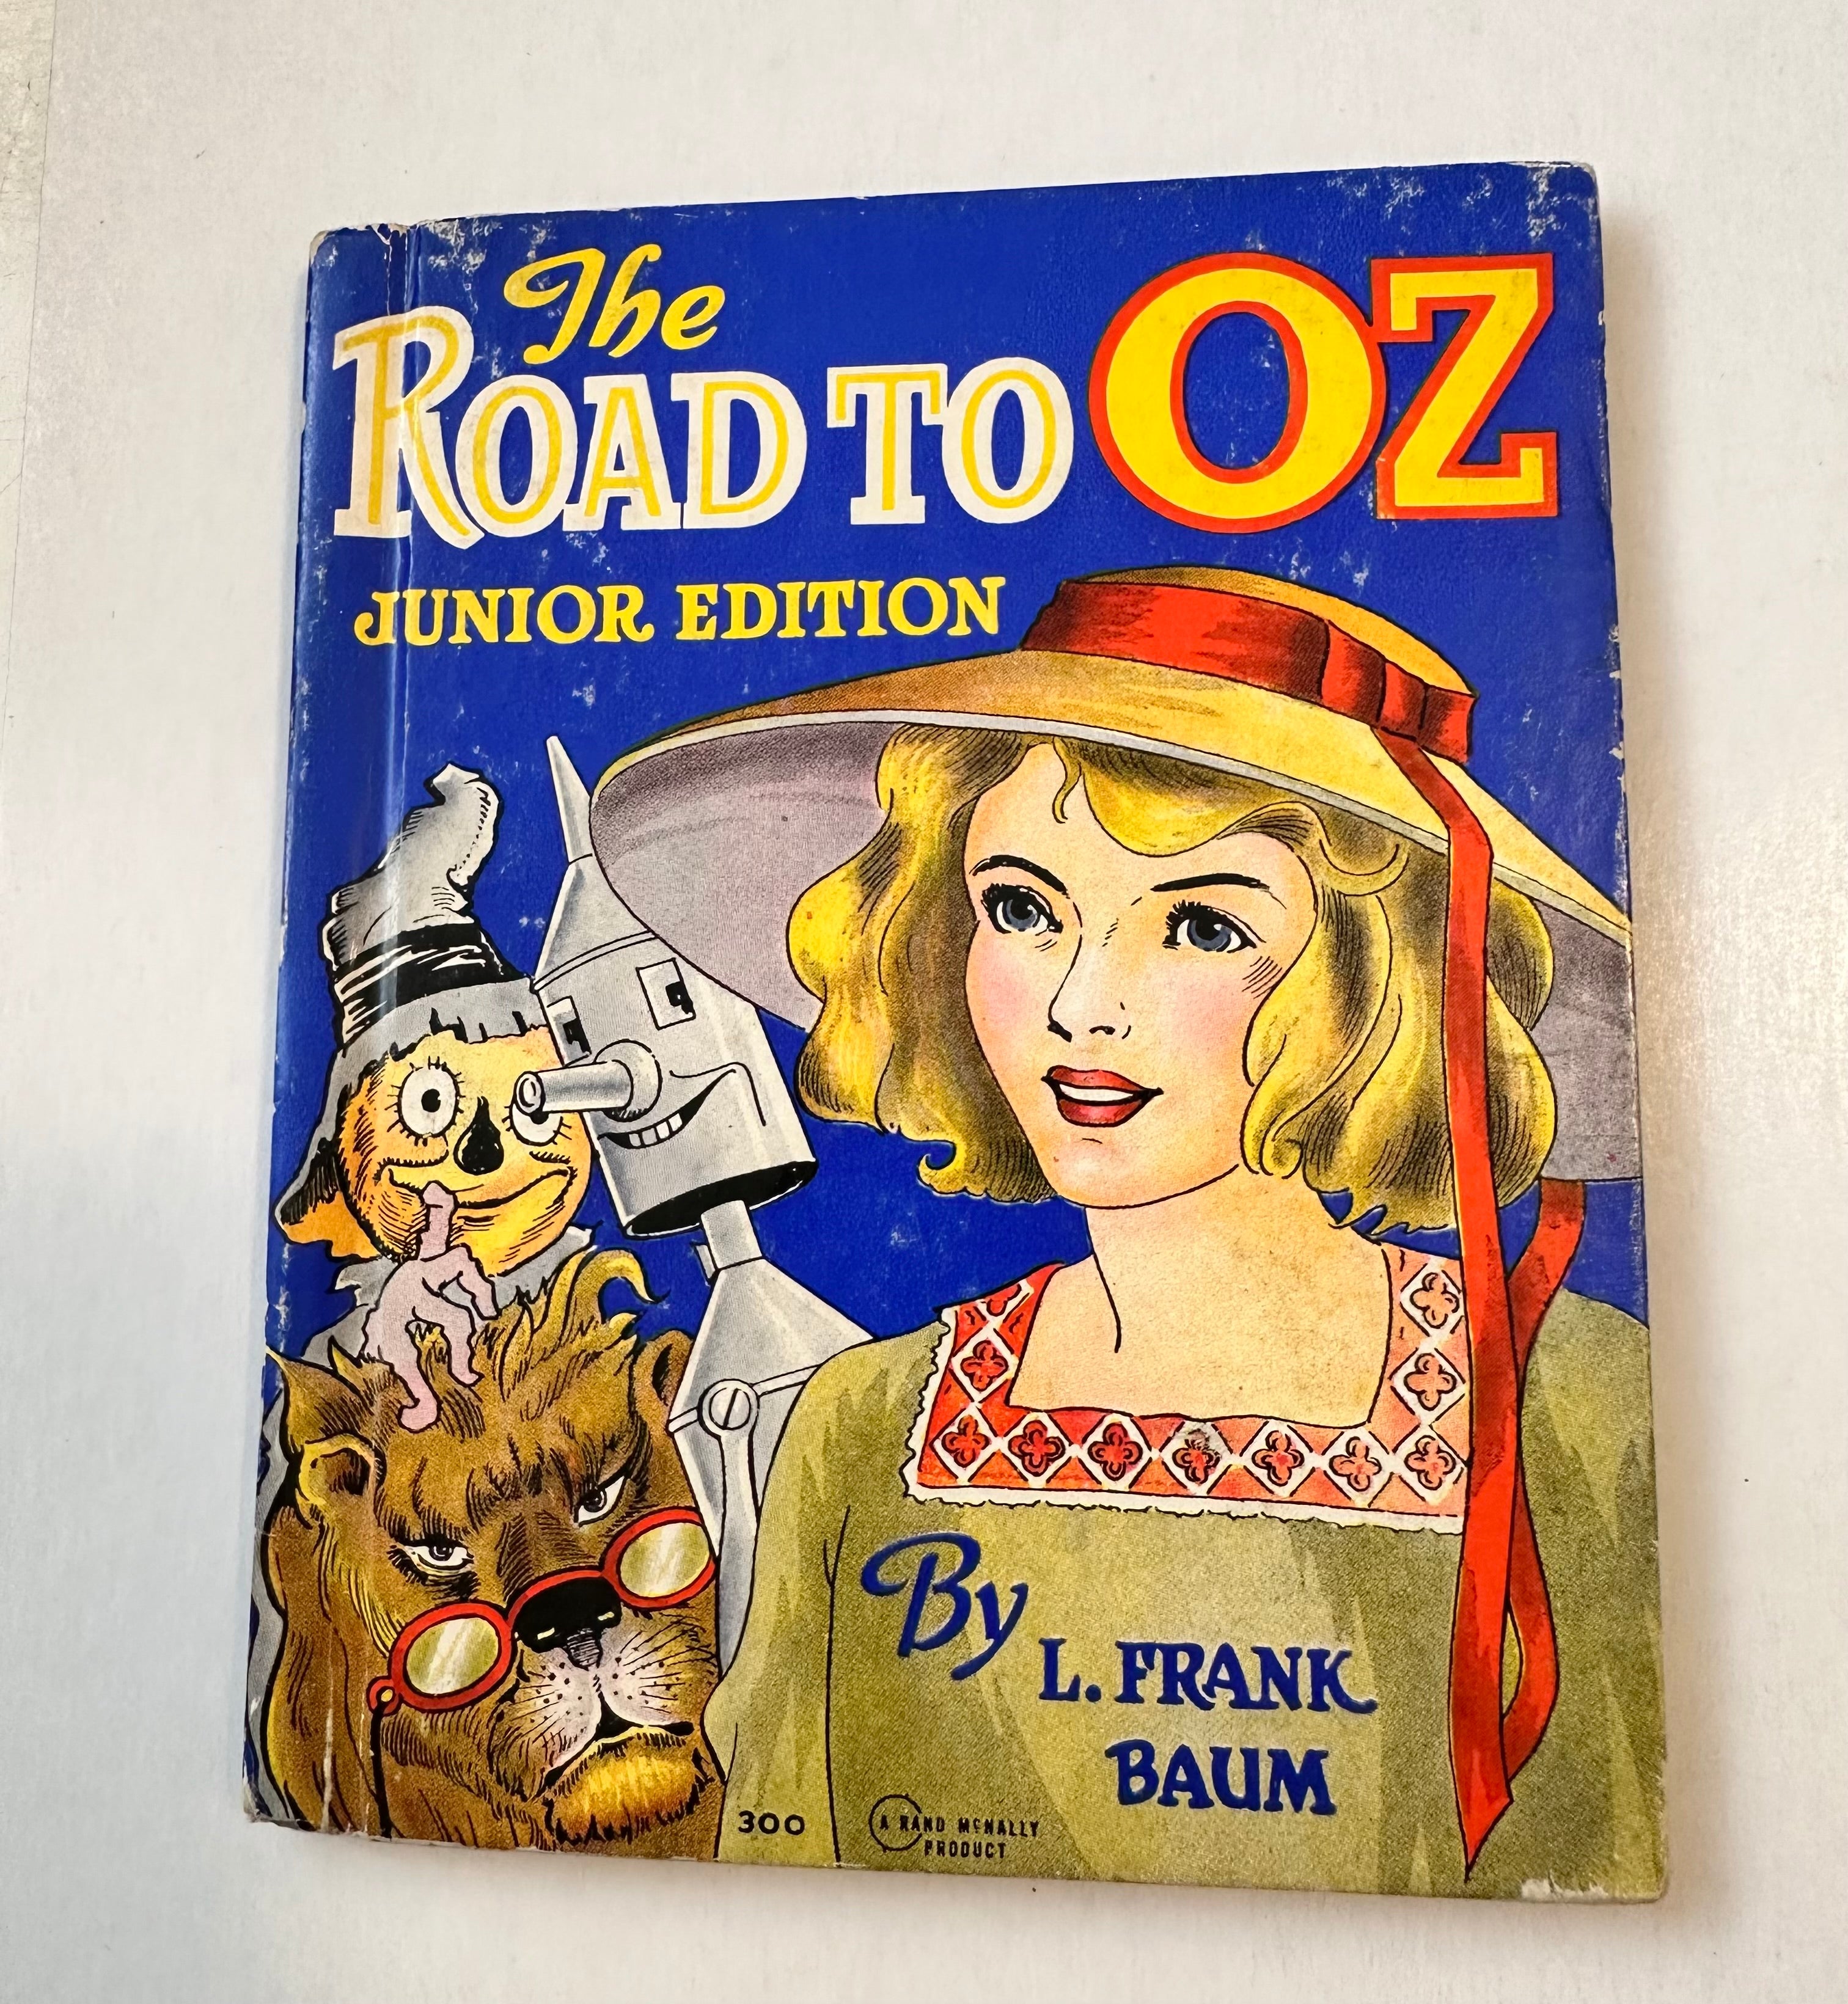 The road to Oz Junior edition rare book 1939